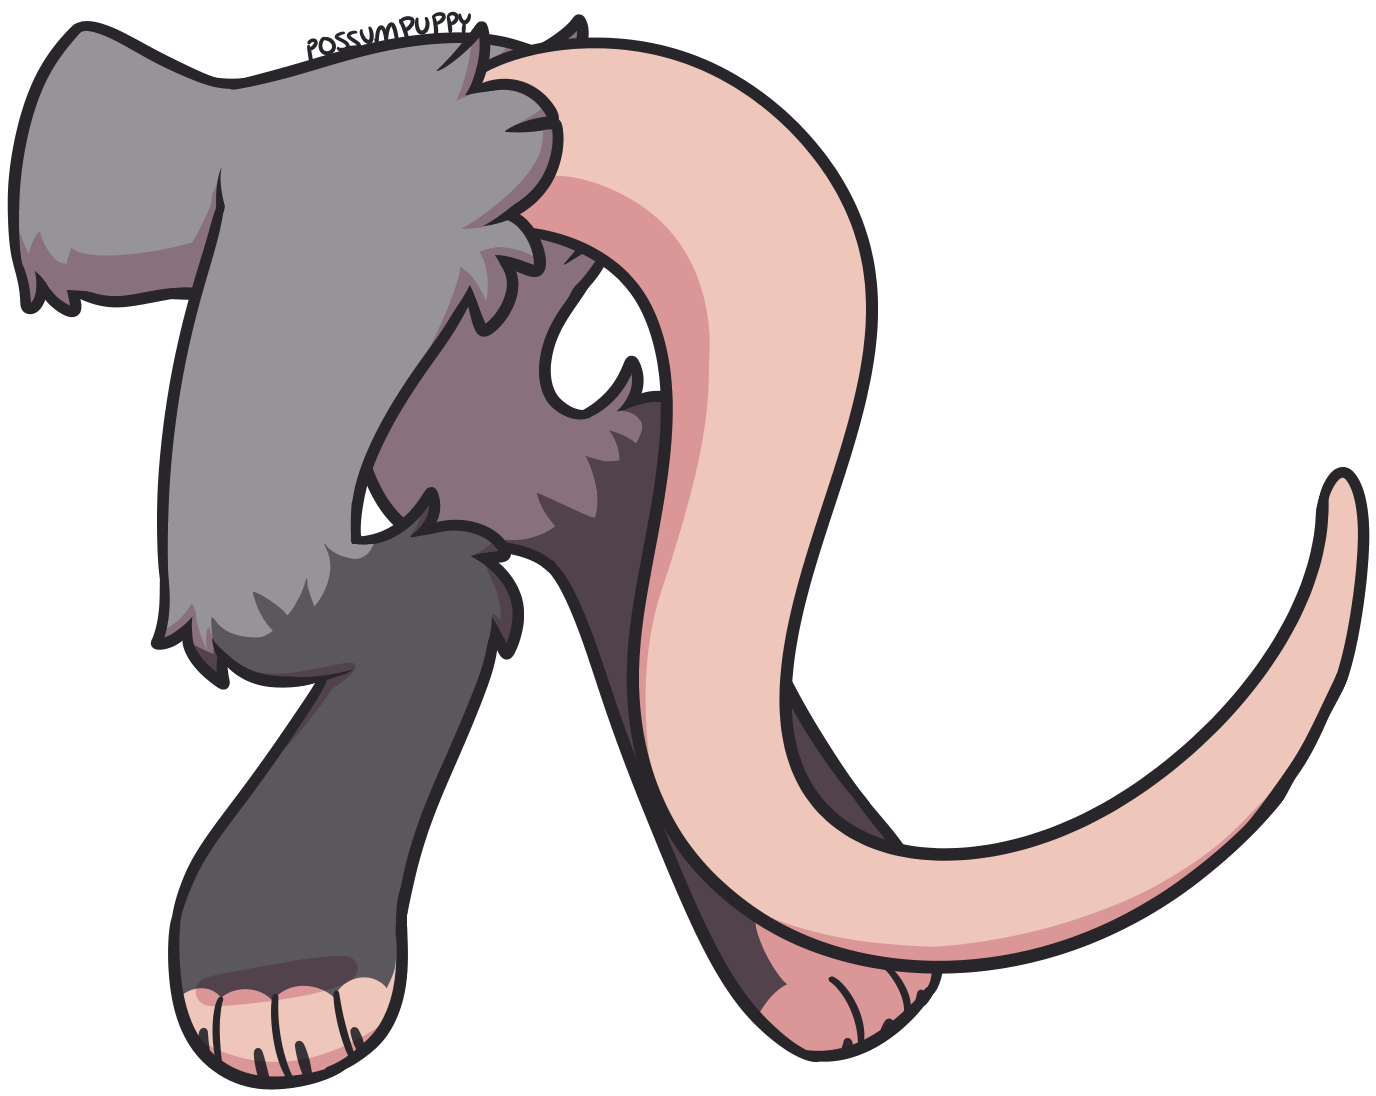 A Cartoon Animal With A Tail